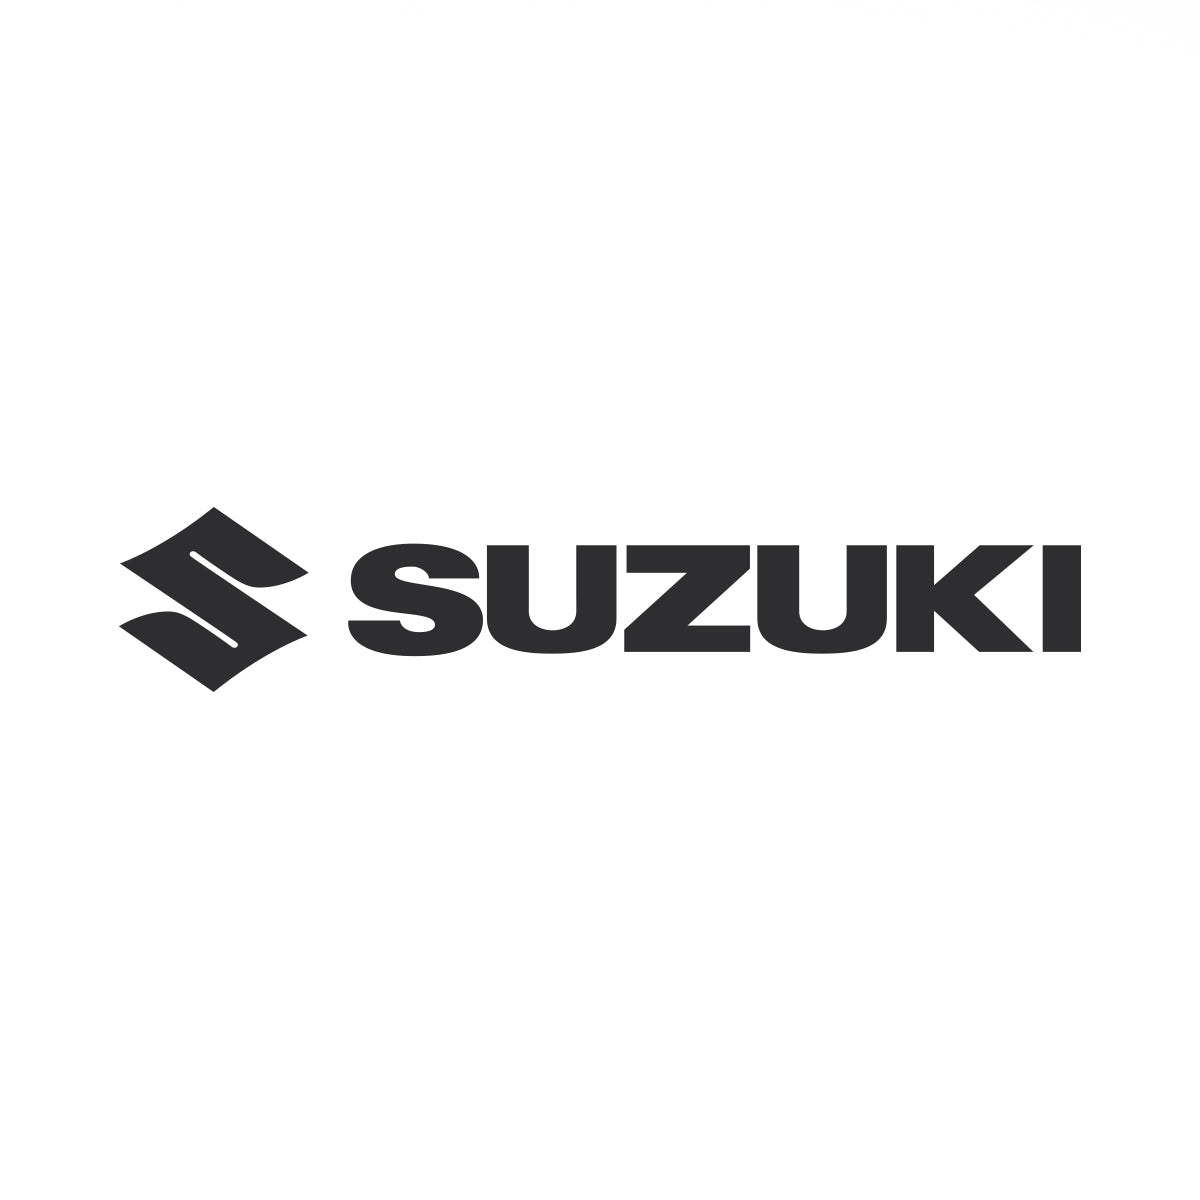 Suzuki Dekor Kits